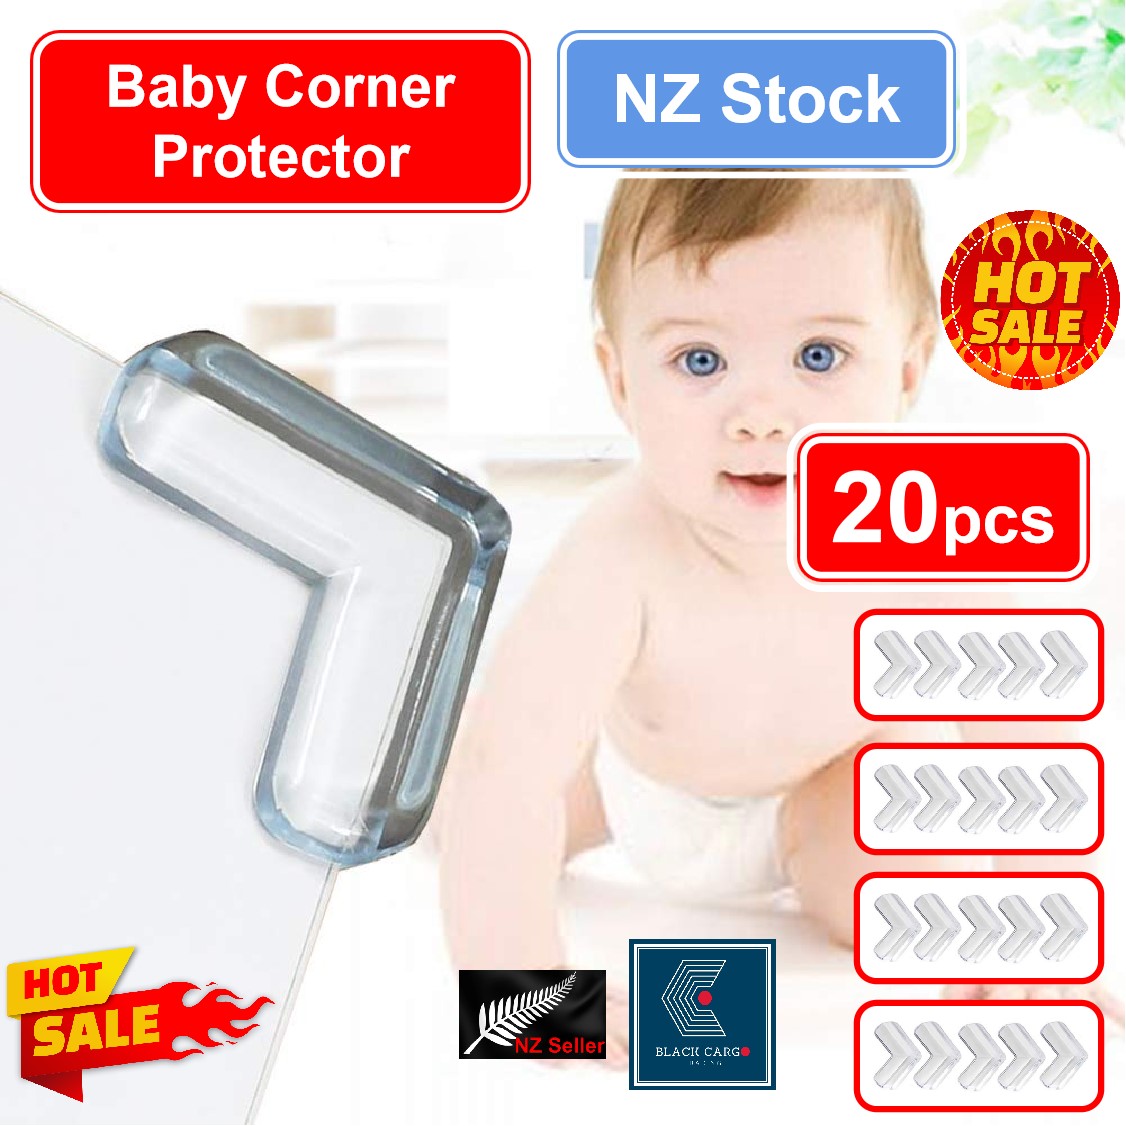 Baby Corner Protector - 20PCS - Referdeal